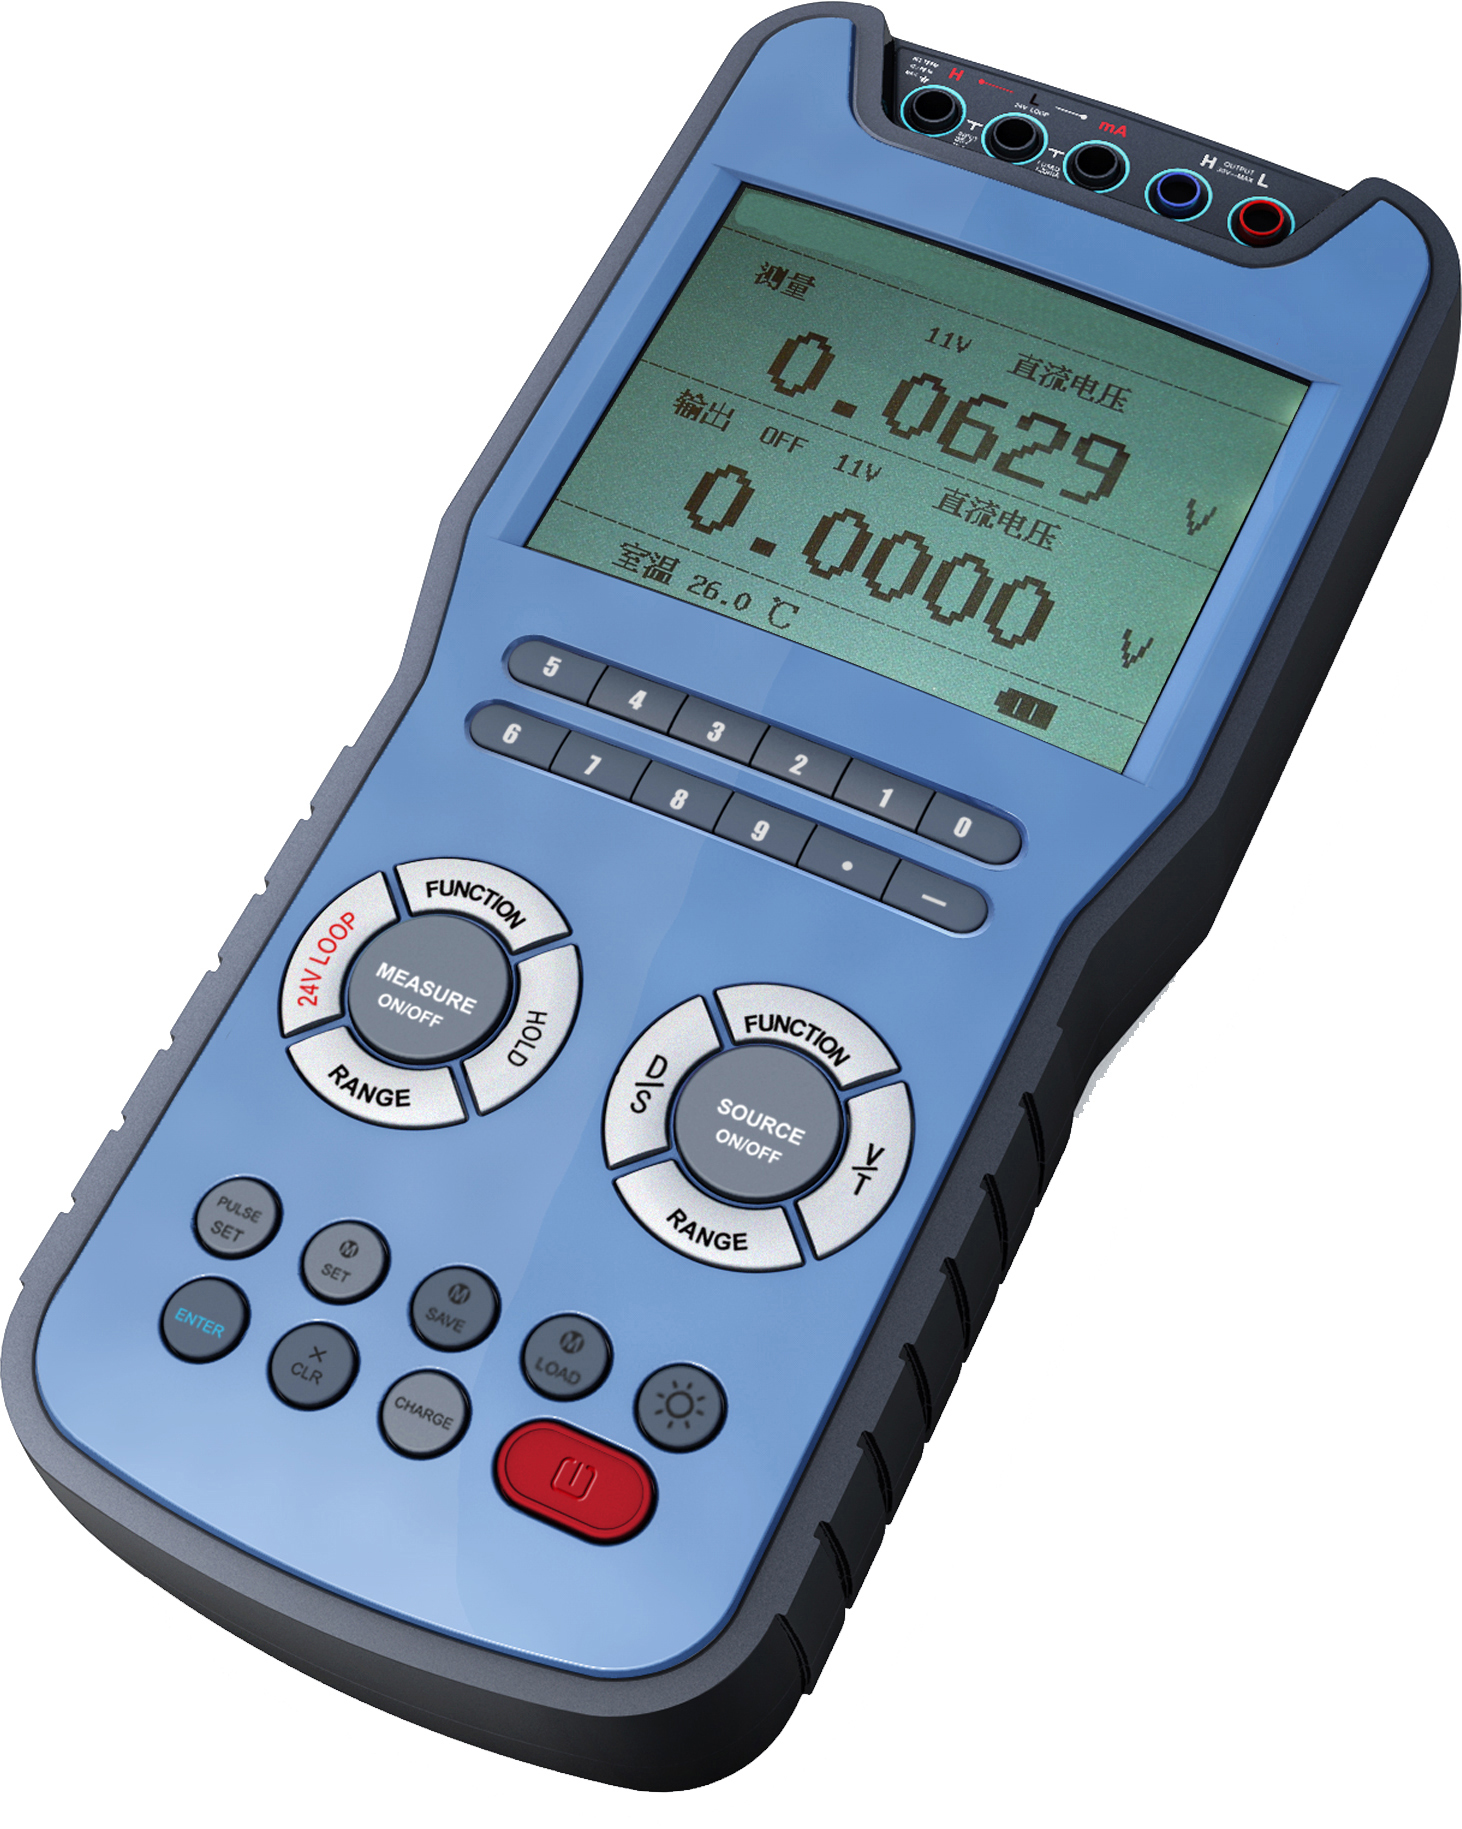 pt100铂电阻温度模拟标准信号源,数字式电压,电流,频率测量功能于一体